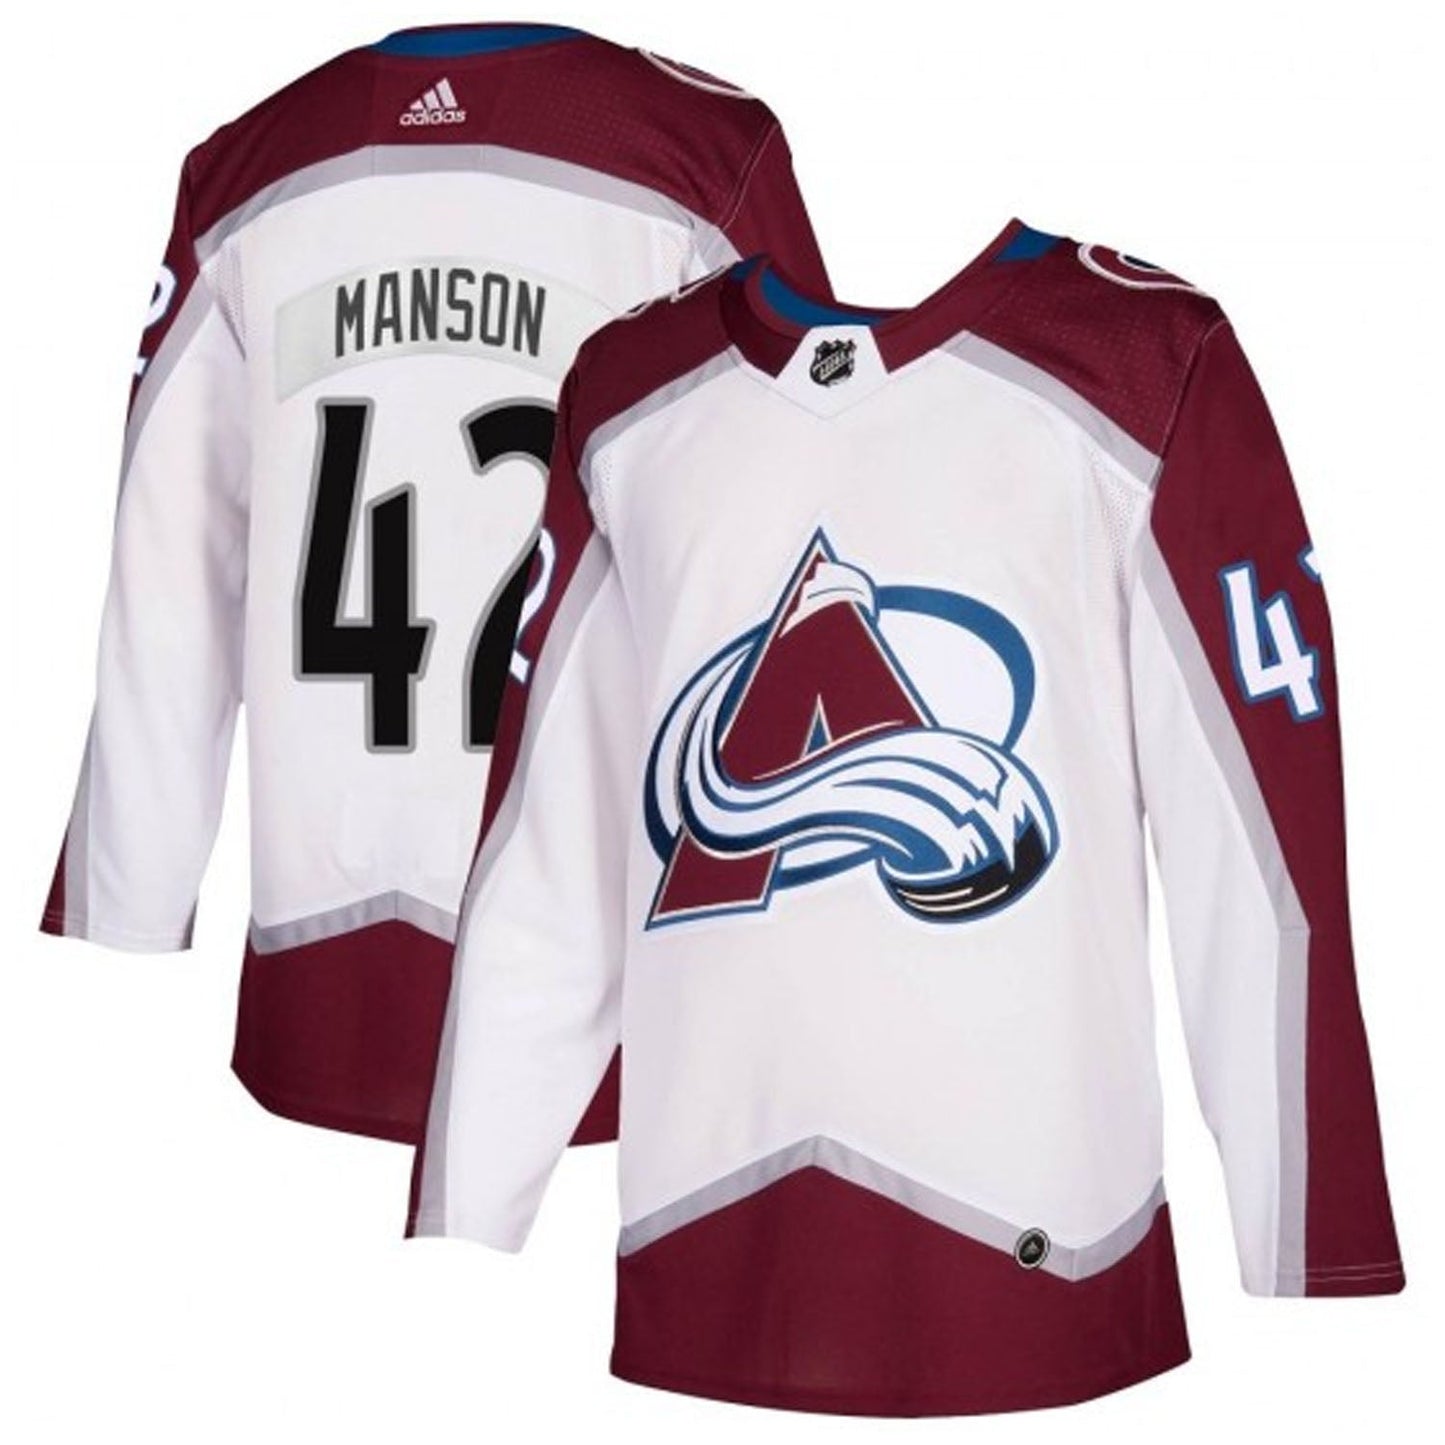 NHL Josh Manson Colorado Avalanche 42 Jersey